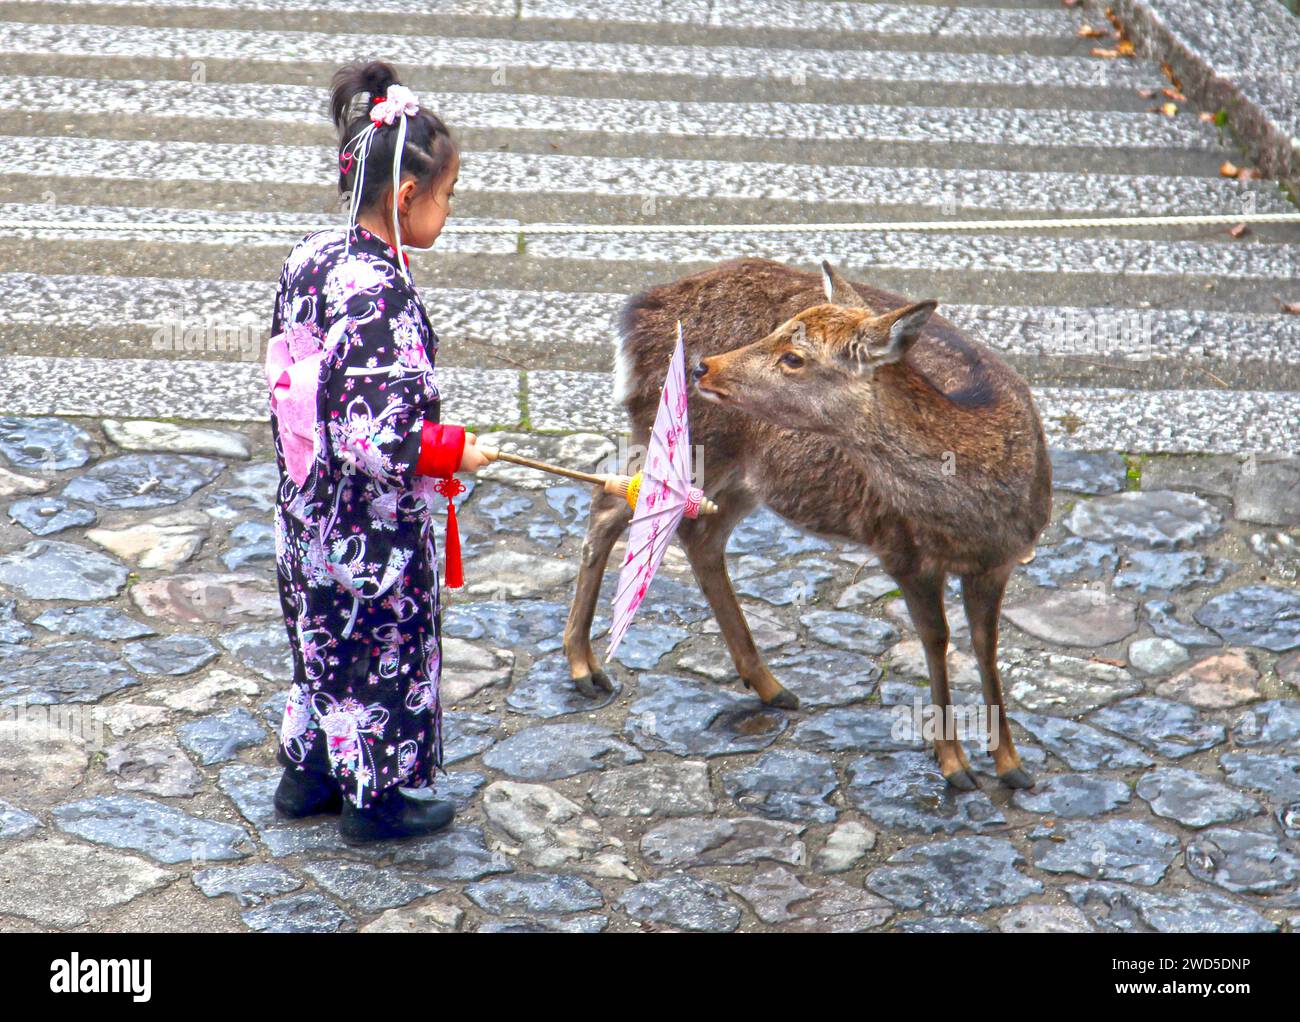 Young girl dressed in Kimon and traditional Japanese clothing with a deer at Kasuga Taisha or Kasuga Grand Shrine in Nara, Japan. Stock Photo